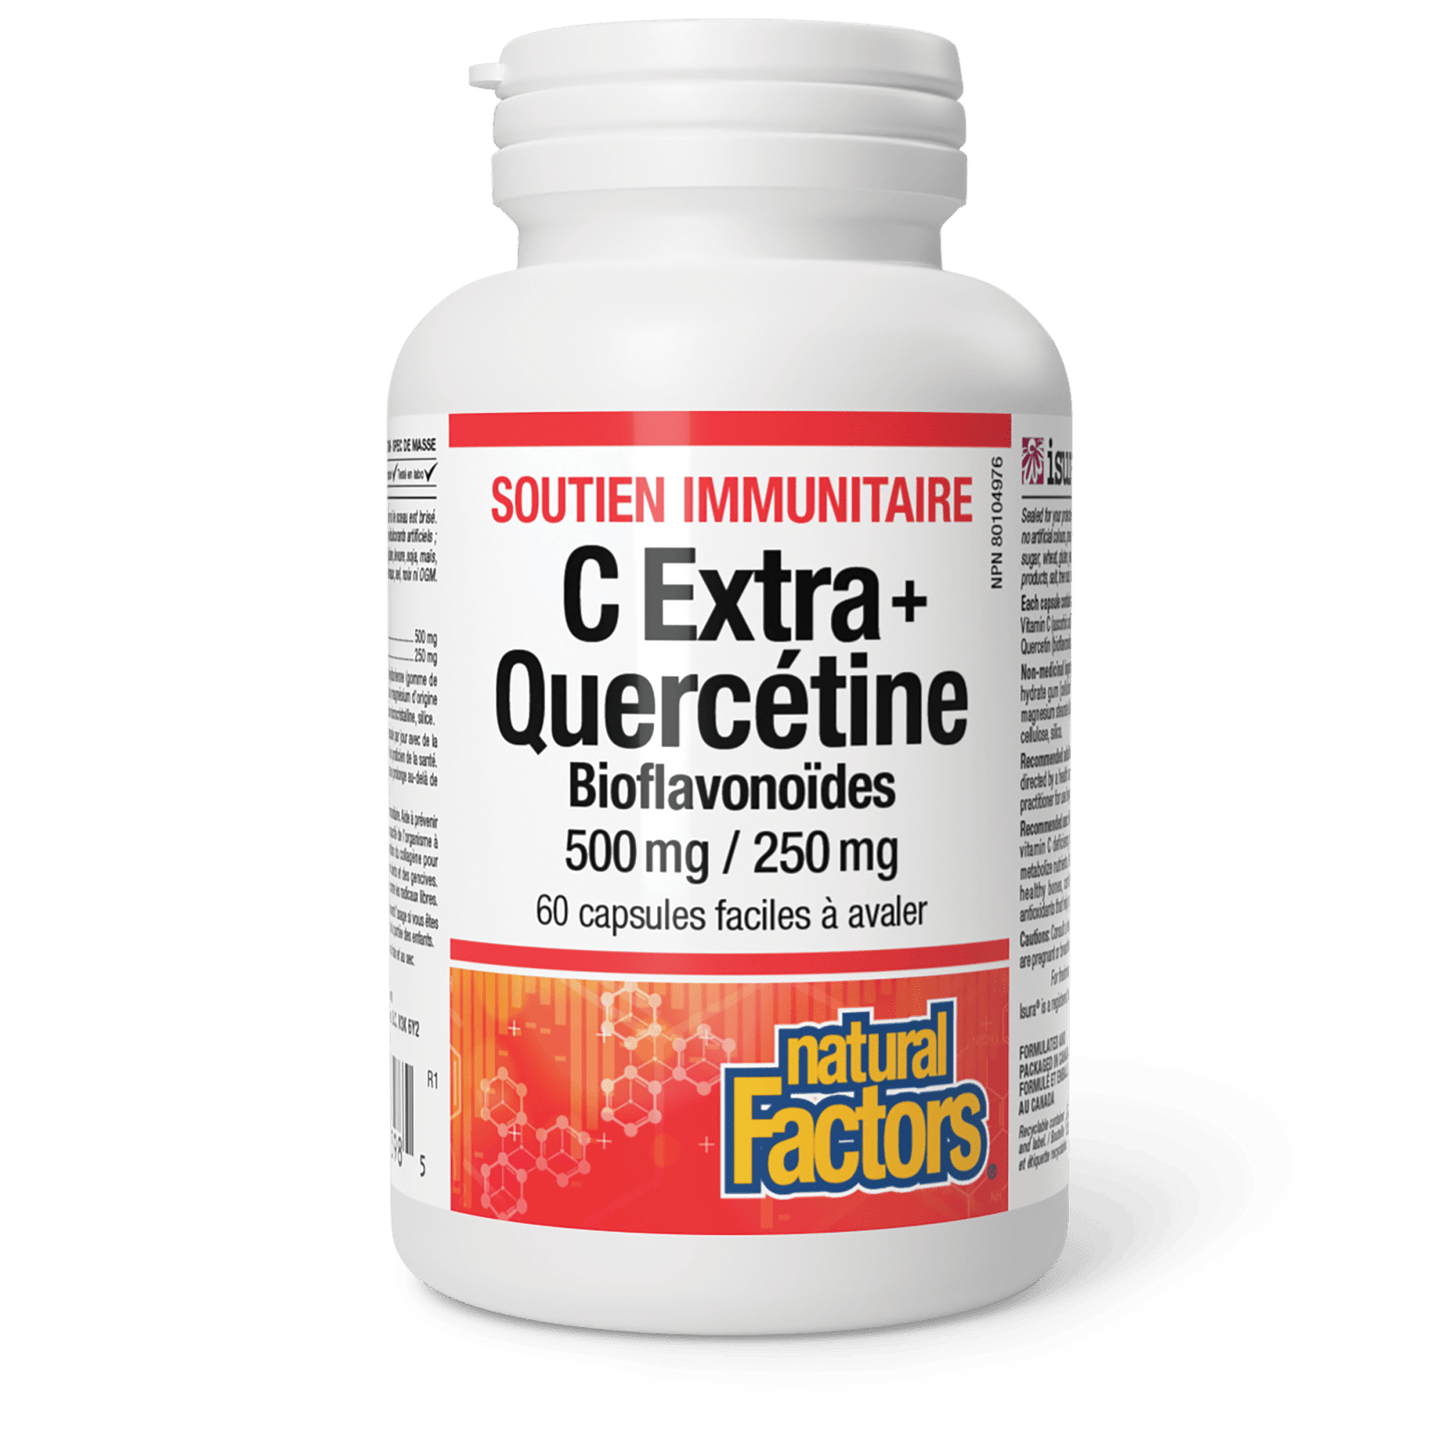 C Extra+ Quercétine Bioflavonoïdes 500 mg/250 mg, Natural Factors|v|image|1398